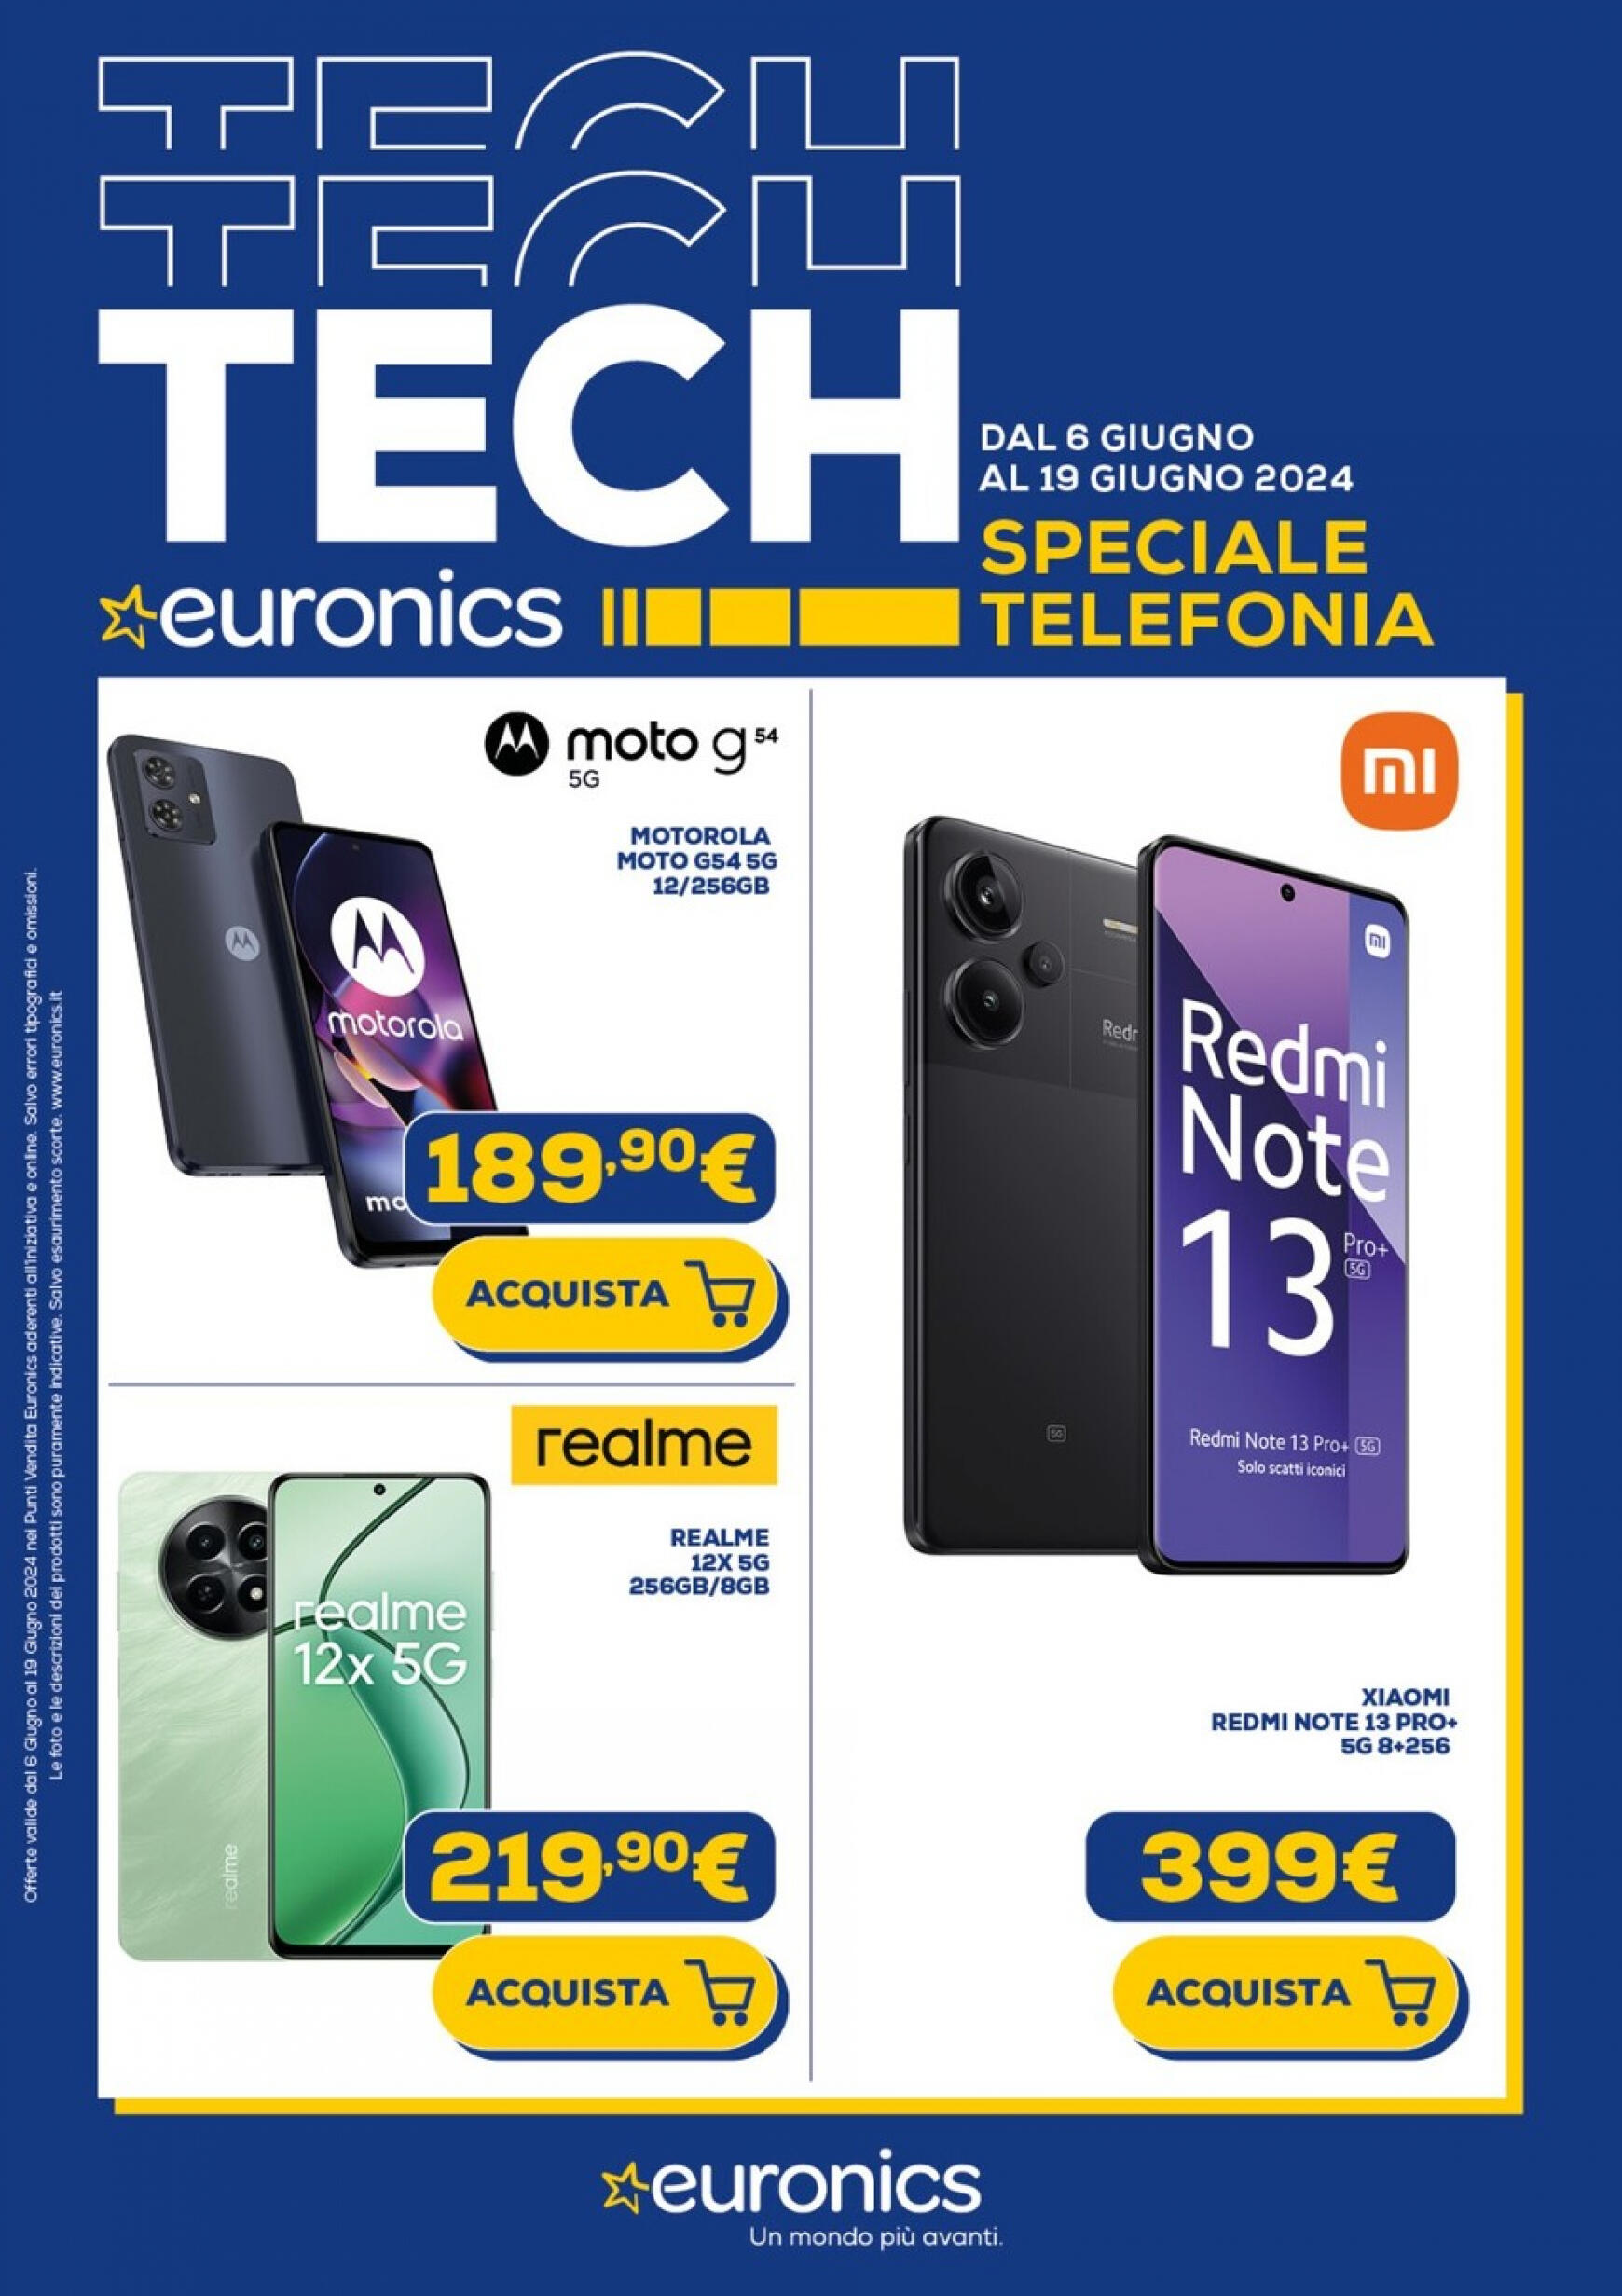 euronics - Nuovo volantino Euronics - Speciale Telefonia 06.06. - 19.06.